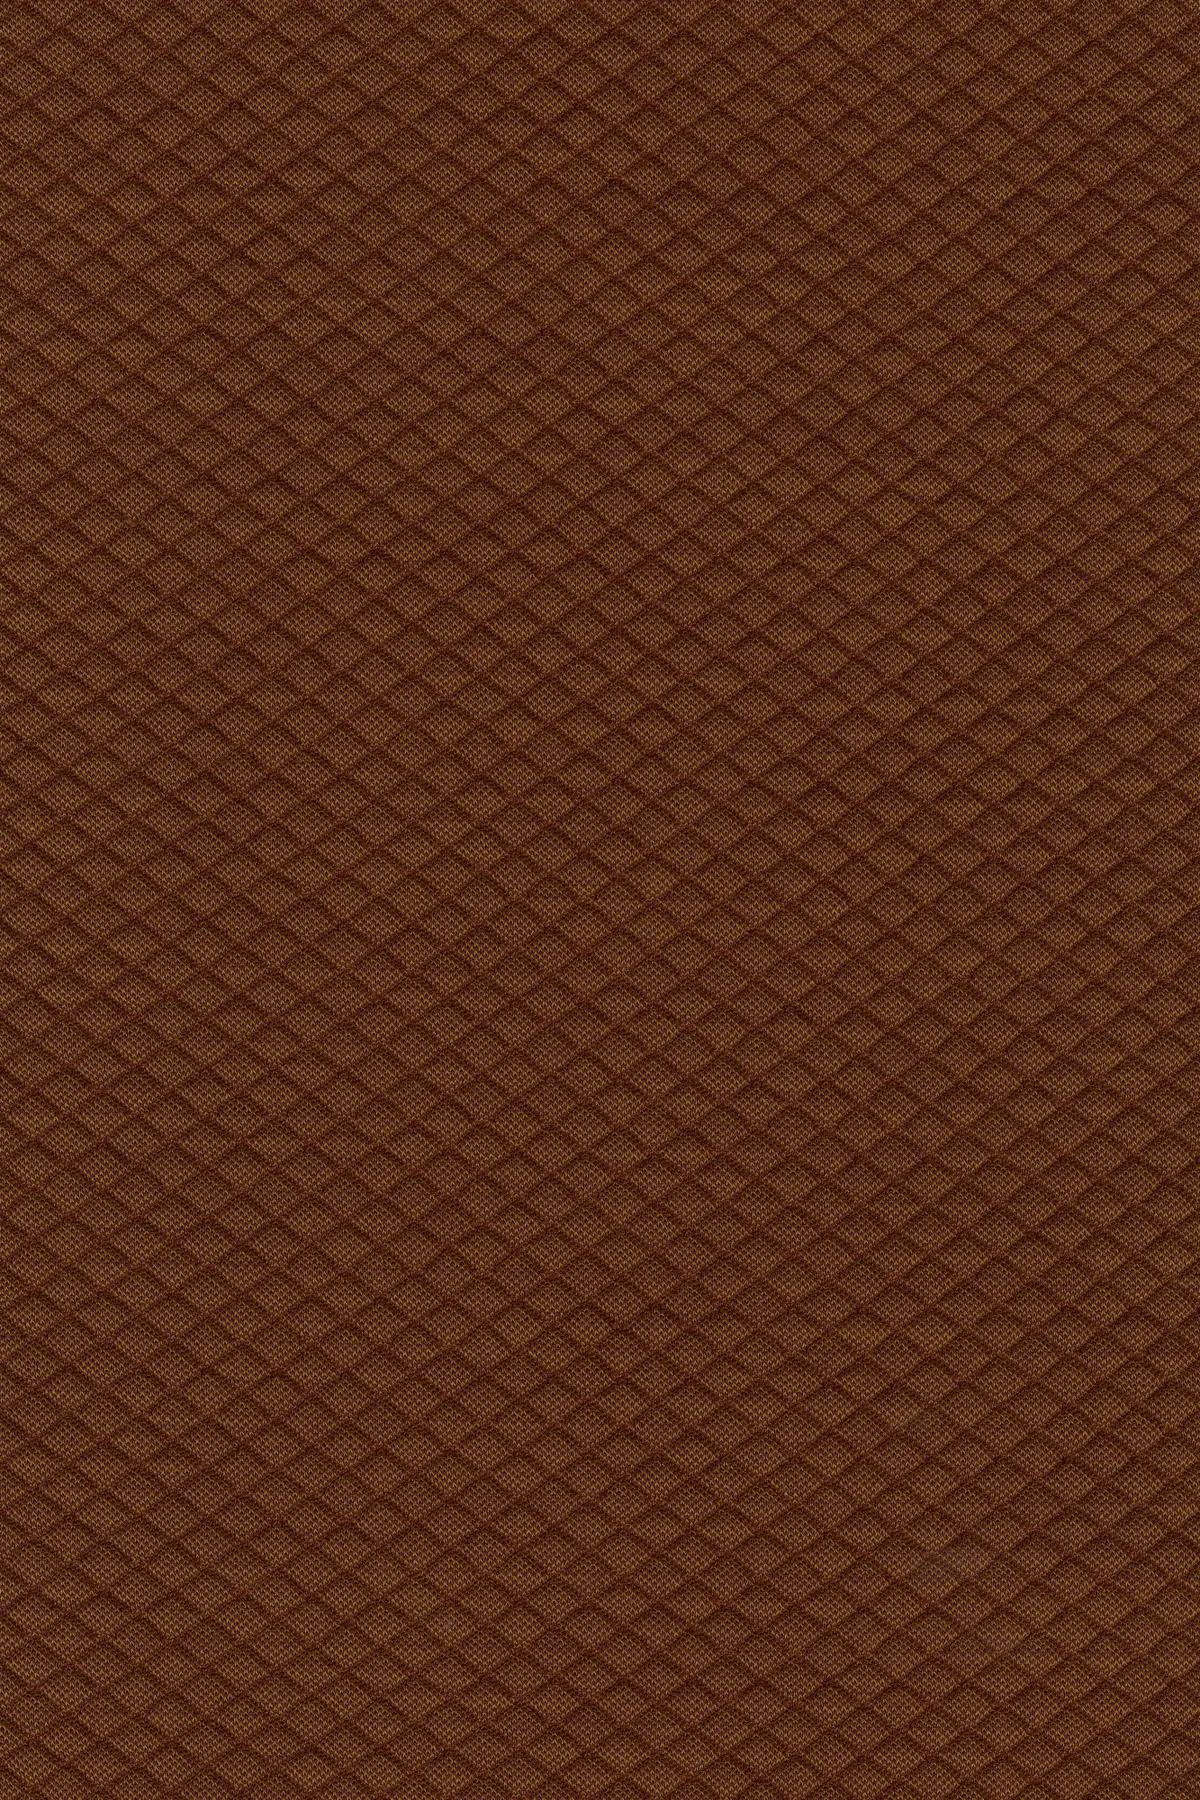 Fabric sample Mosaic 2 0472 orange